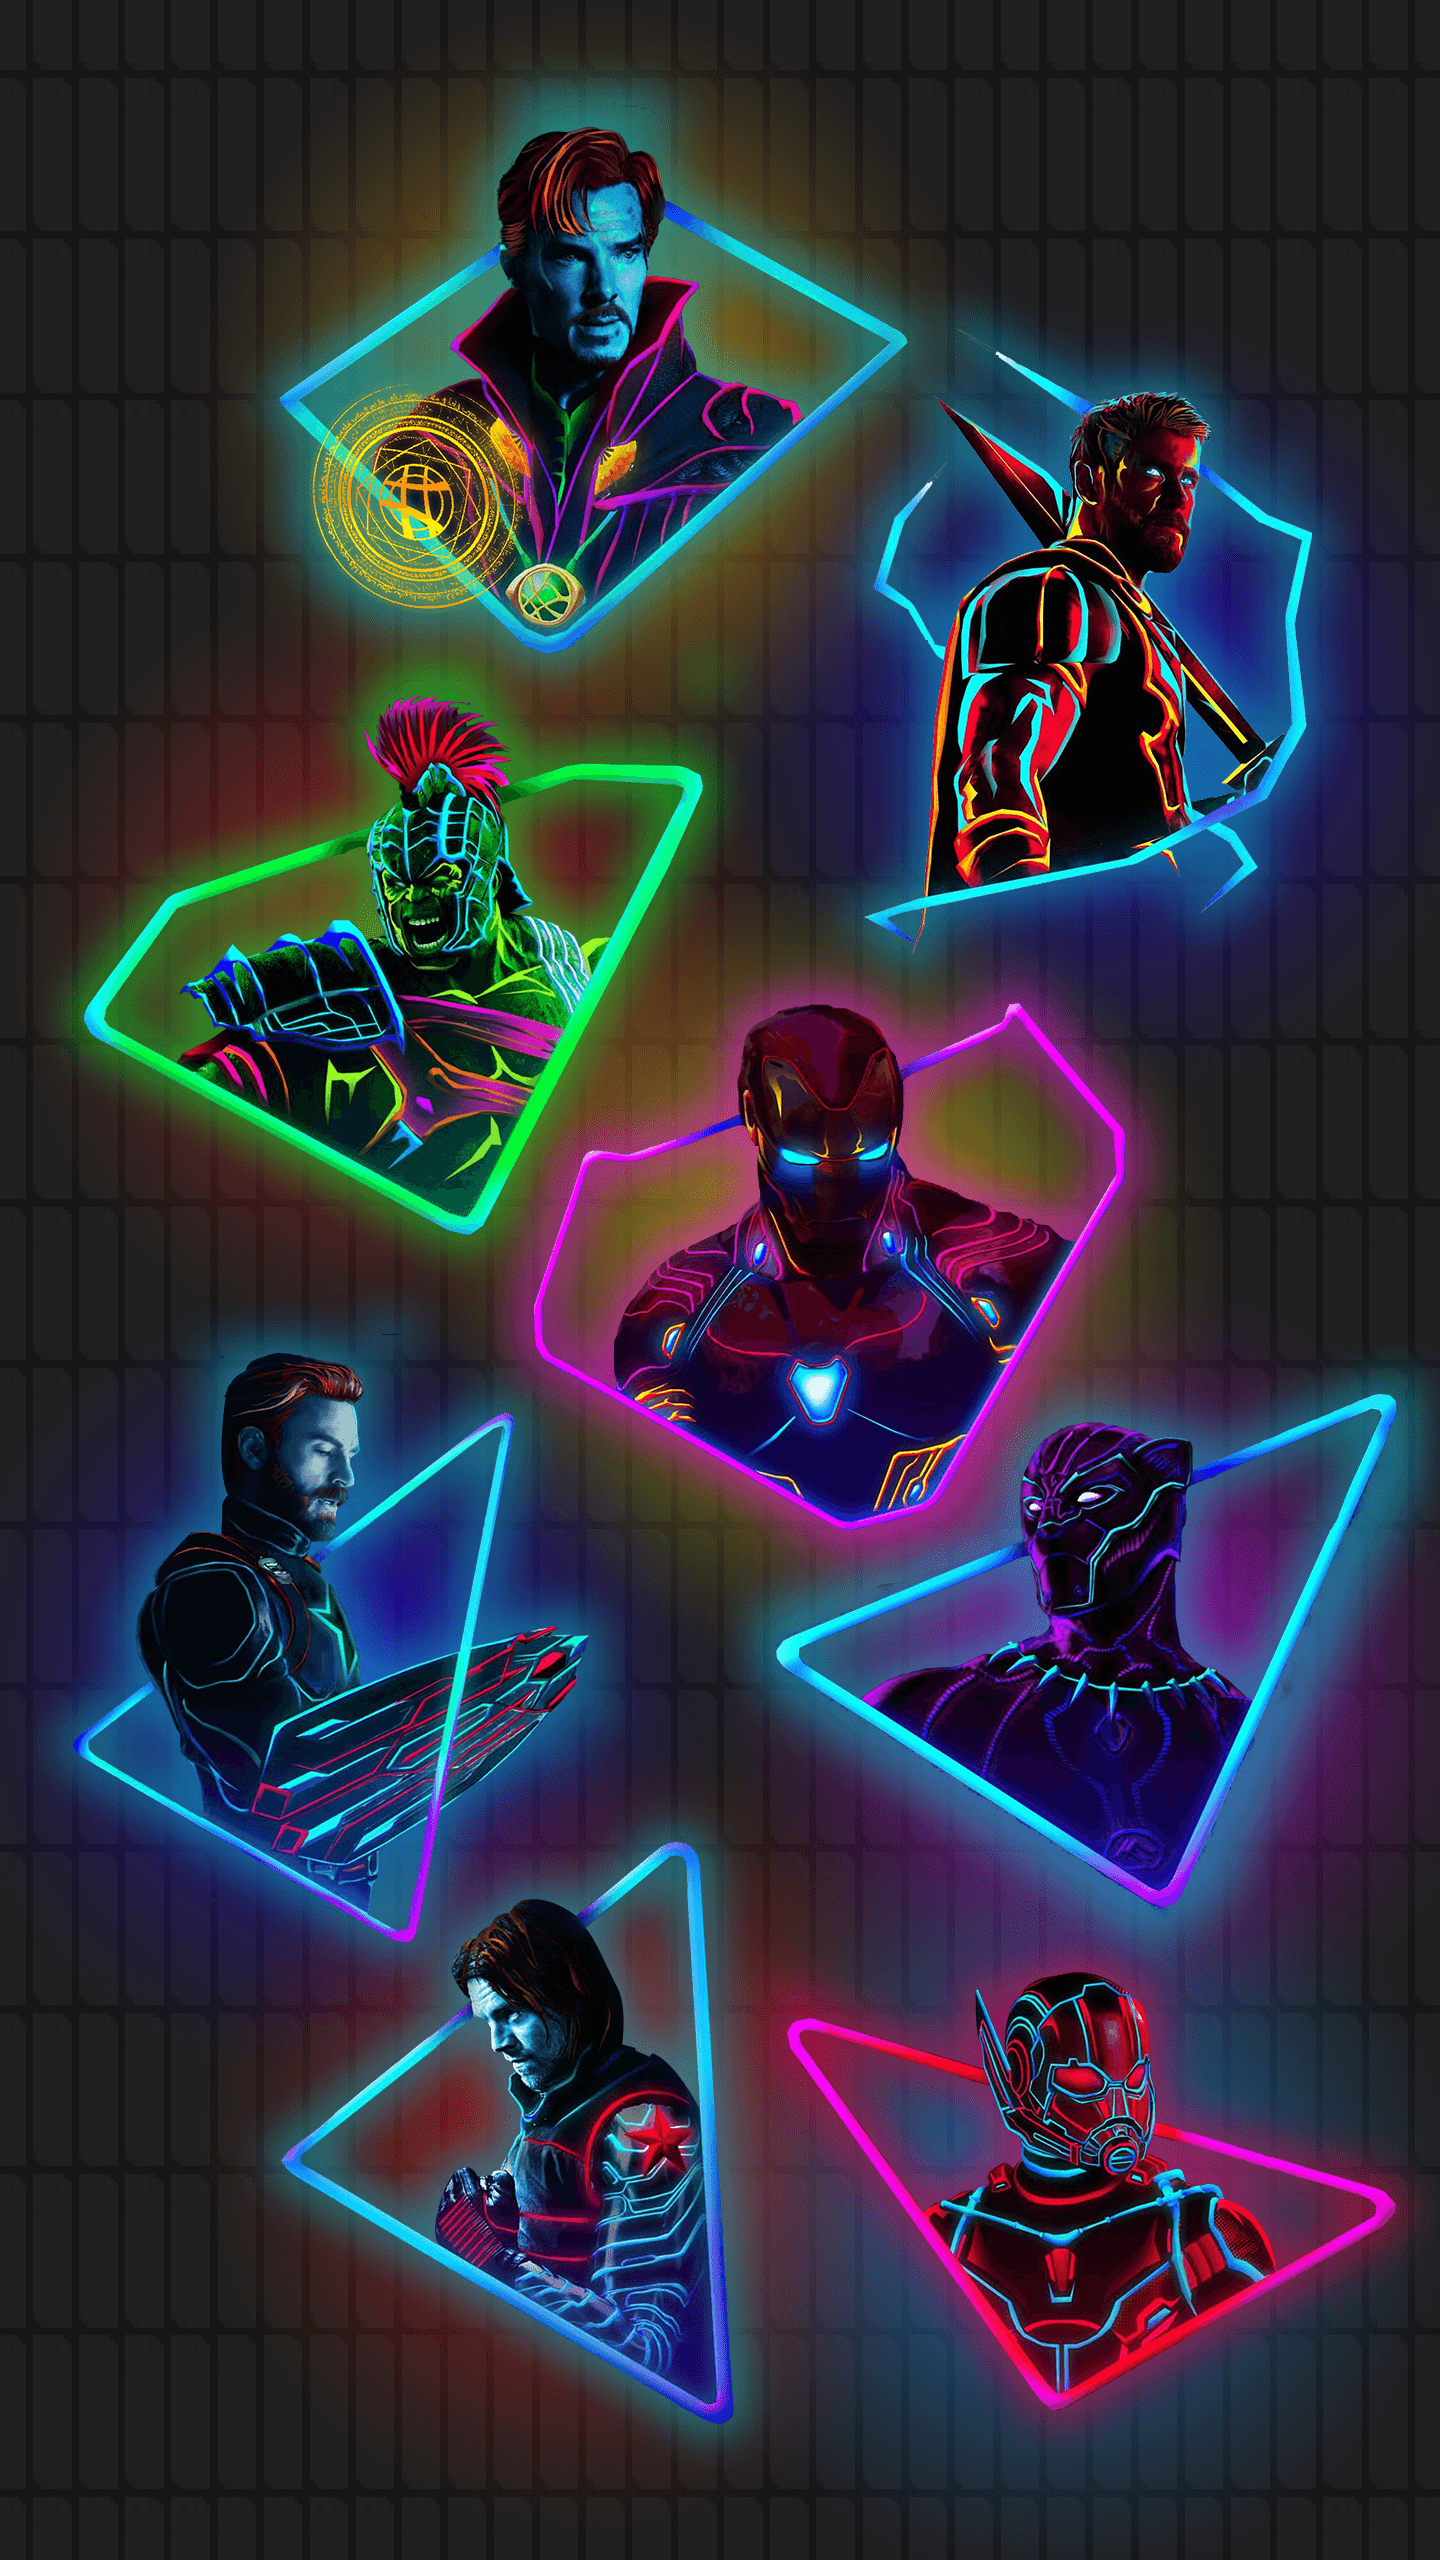 Neon Marvel edit (original art by Aniket Jatav)